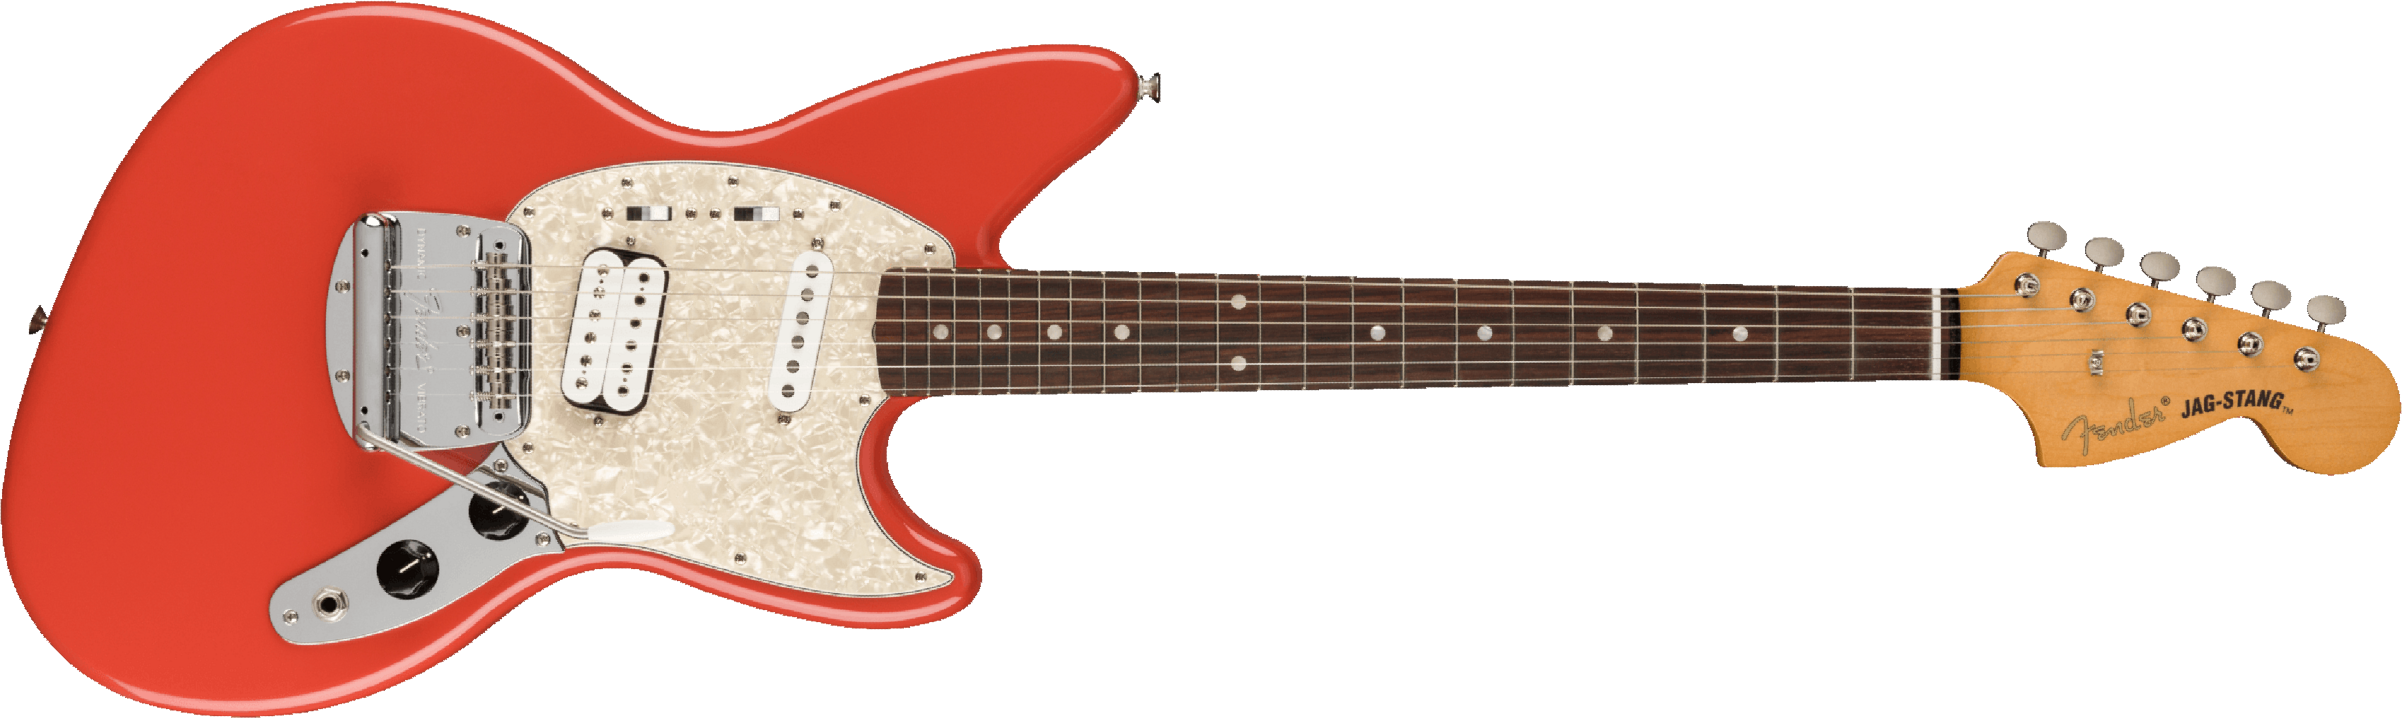 Fender Jag-stang Kurt Cobain Artist Hs Trem Rw - Fiesta Red - Retro-Rock-E-Gitarre - Main picture